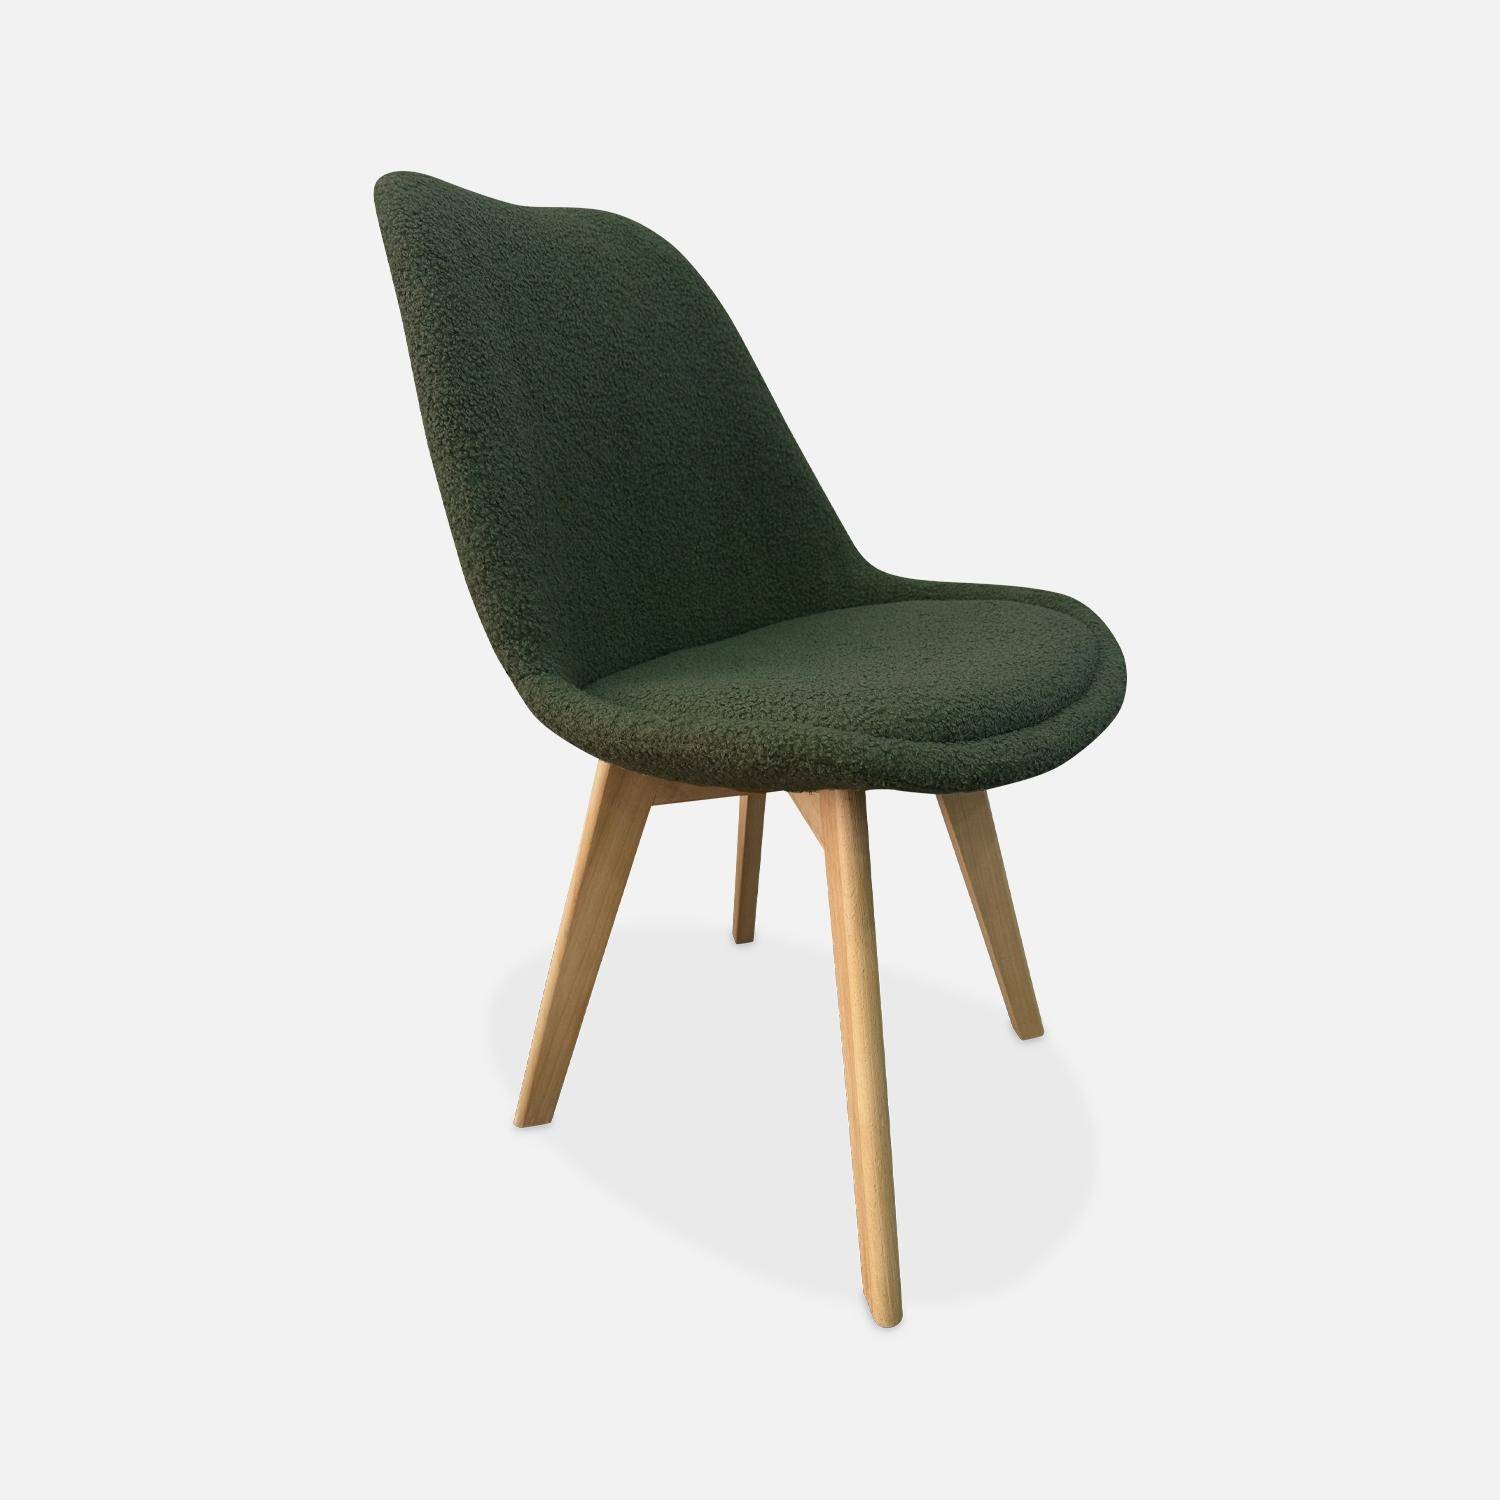 4er Set skandinavische Stühle mit khaki Bouclé-Bezug und Buchenholzbeinen - NILS ,sweeek,Photo3